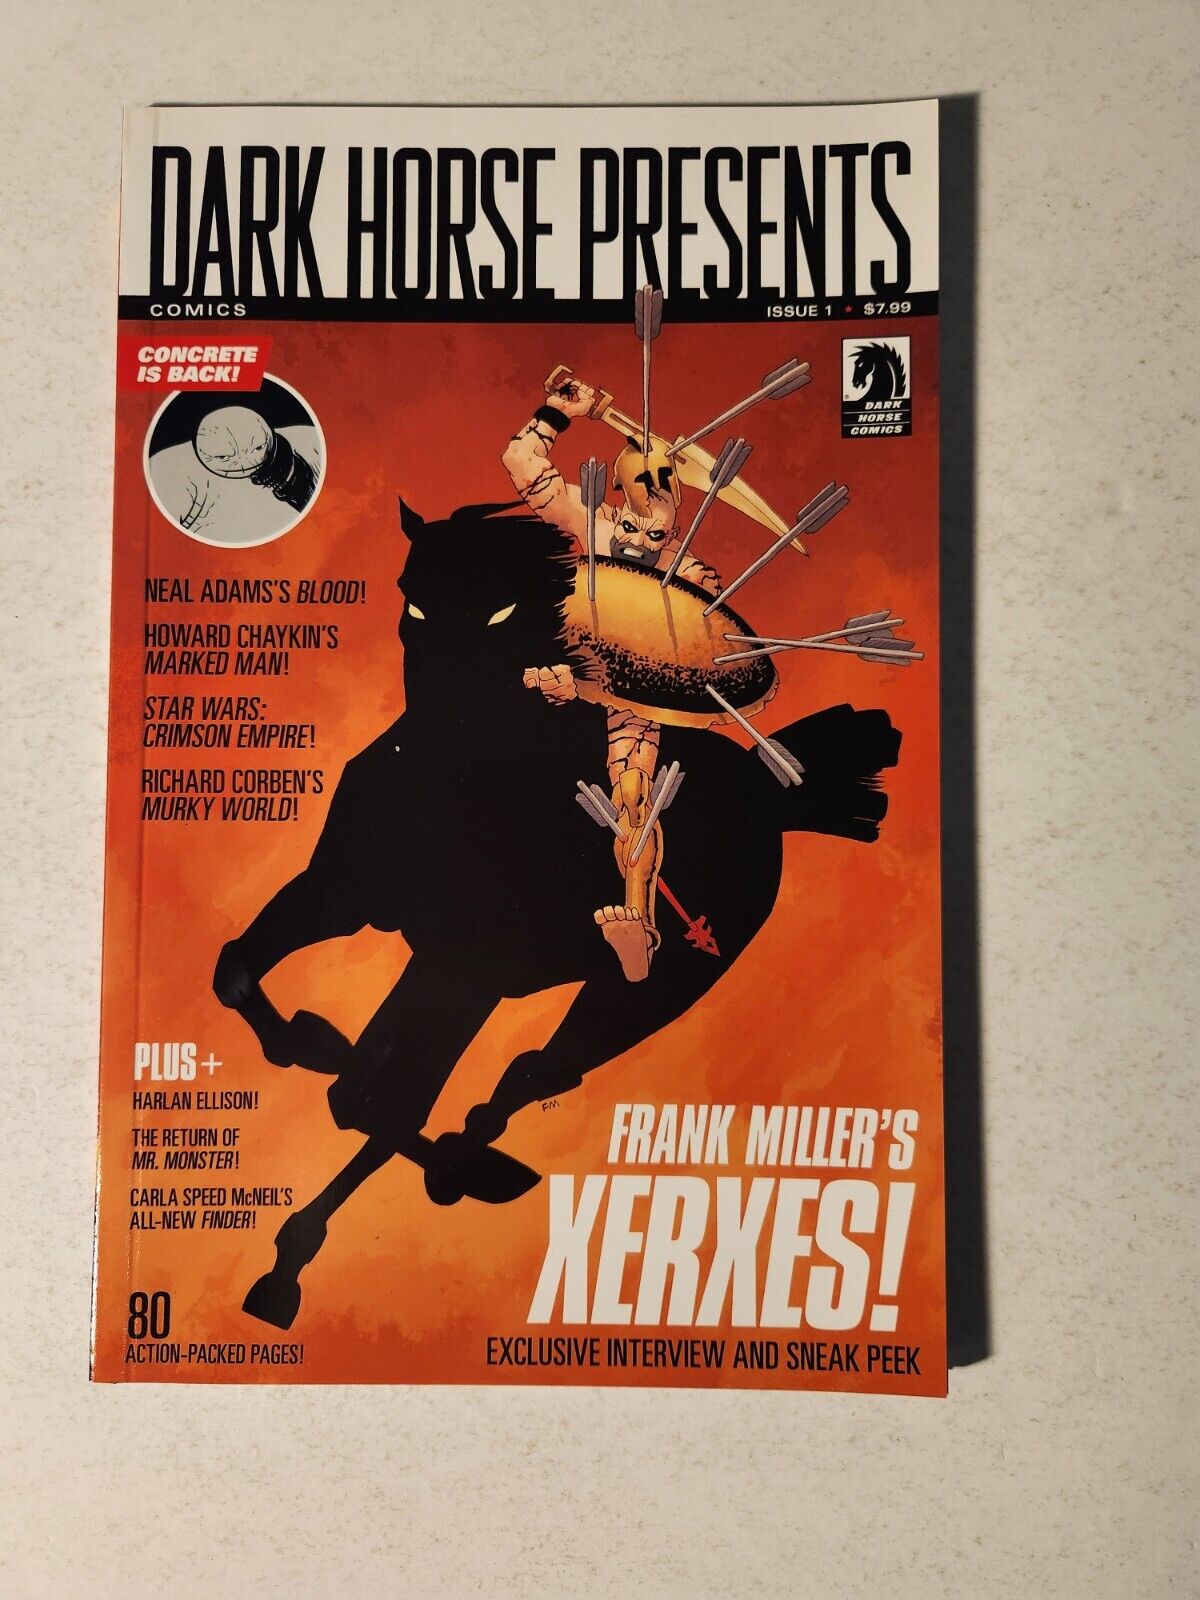 Dark Horse Presents #1 Vol 2 ~Paul Chadwich Concrete, Neal Adams art, Miller art